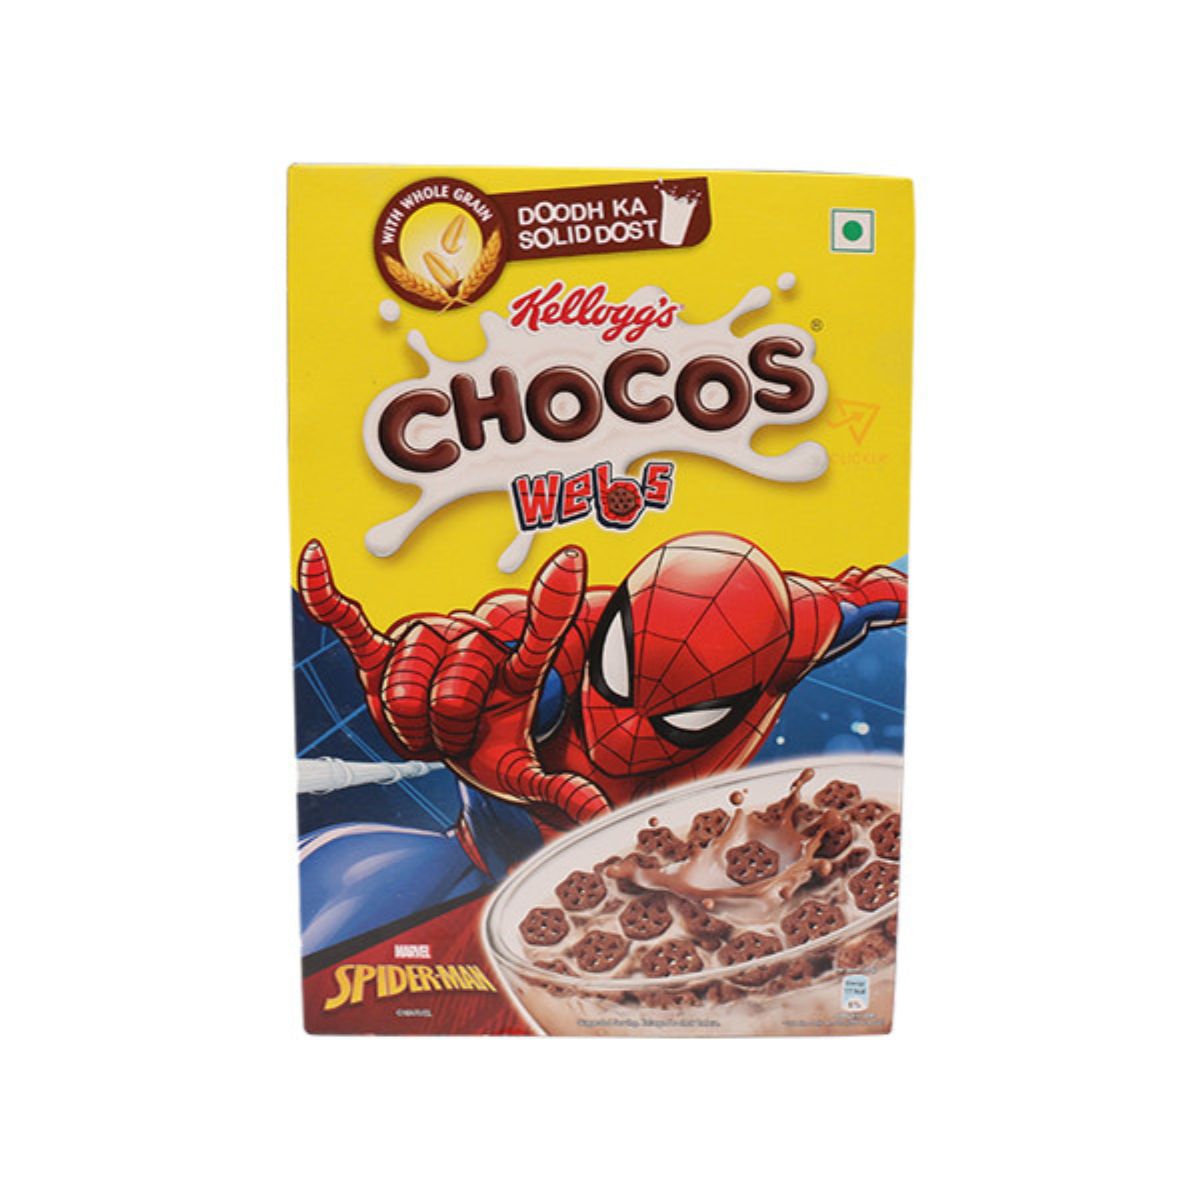 Kellogg's Chocos Webs - With Whole Grain - 300g